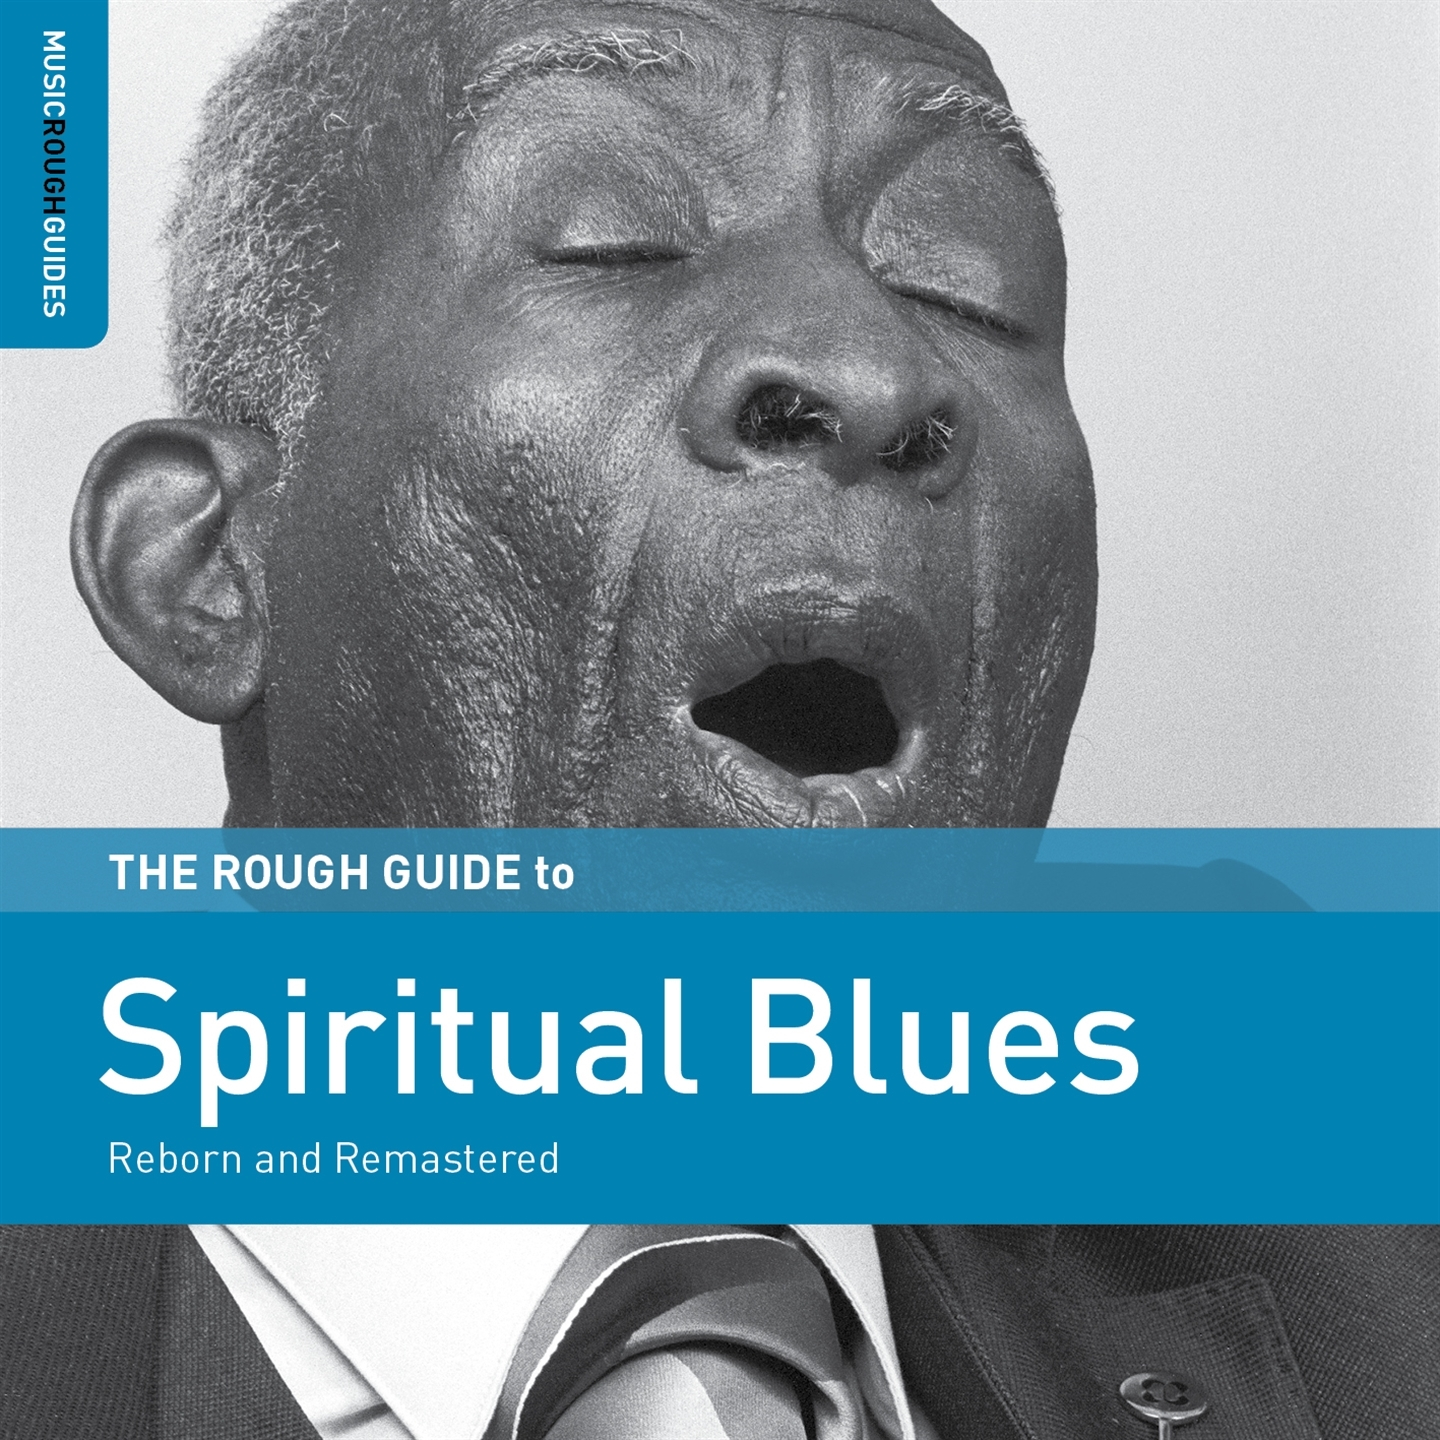 THE ROUGH GUIDE TO SPIRITUAL BLUES